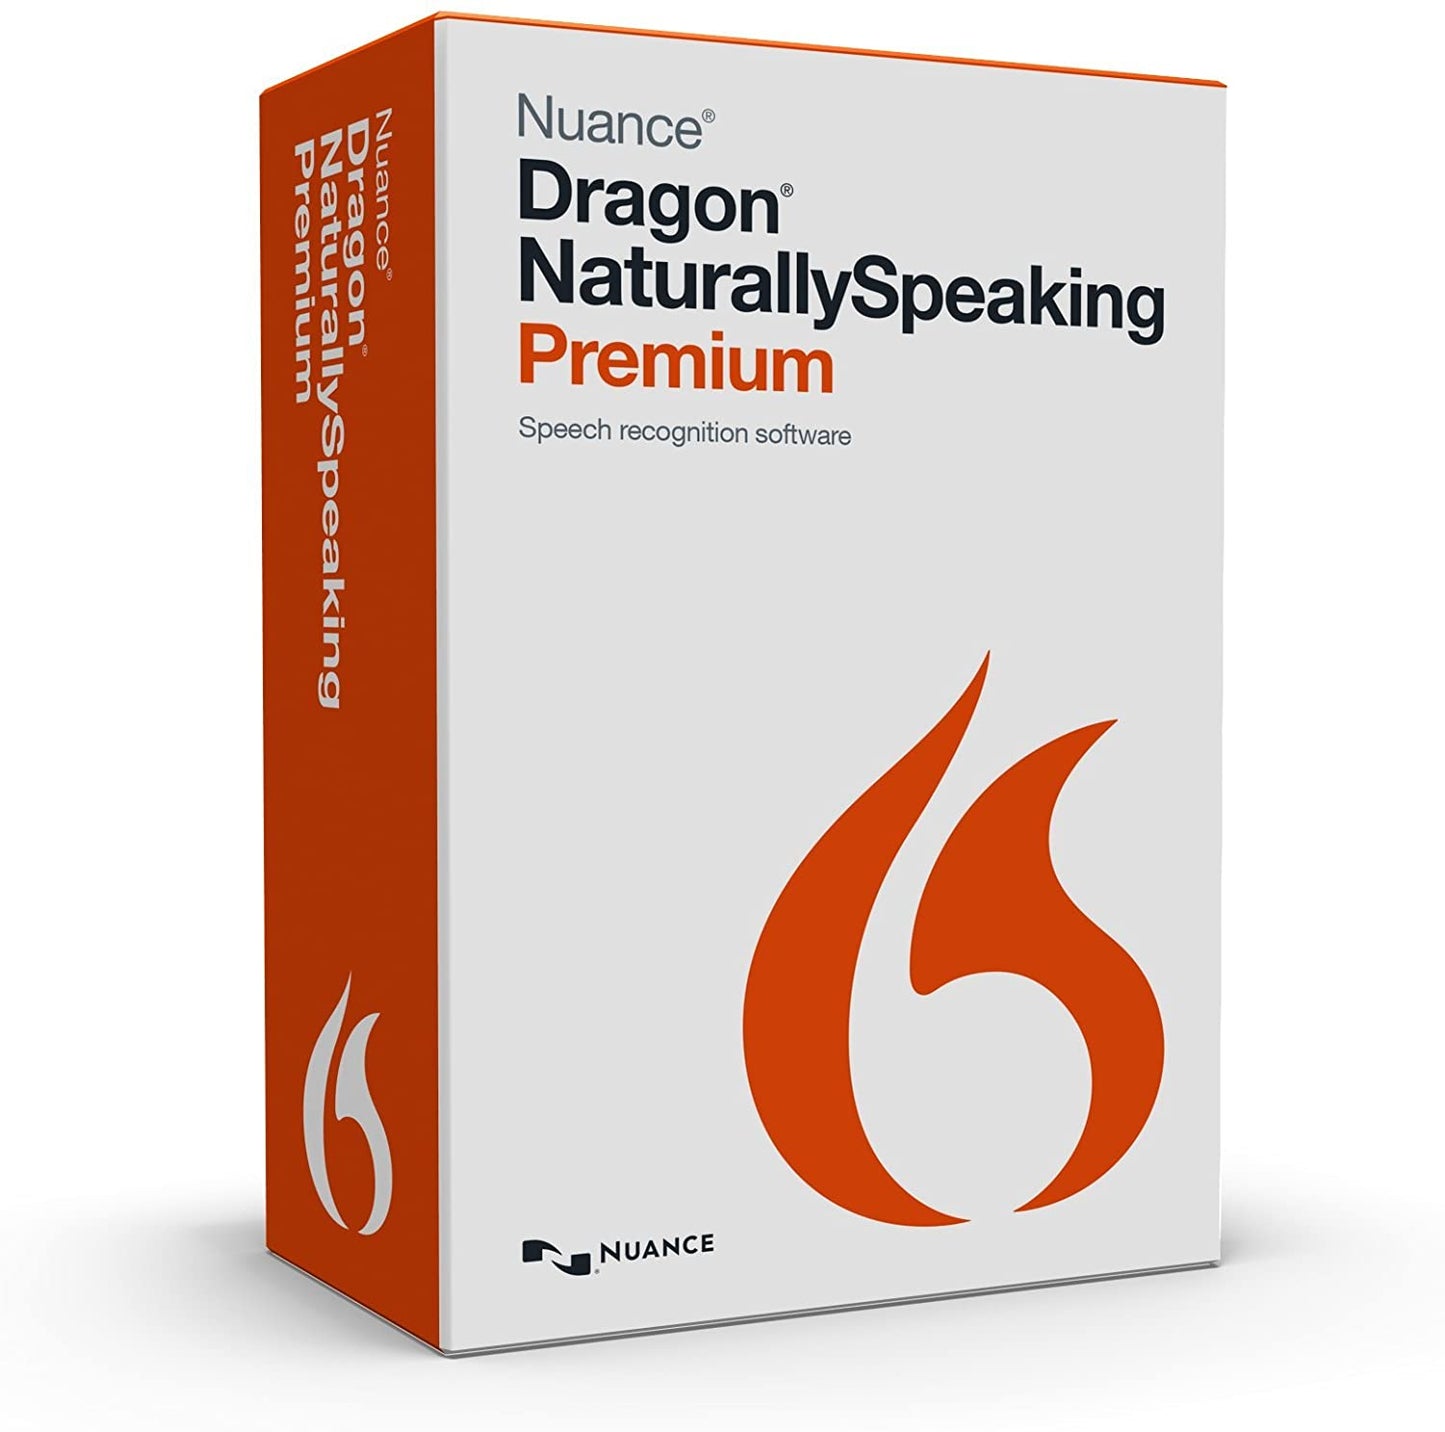 Nuance Dragon NaturallySpeaking Premium 13 Lifetime Guarantee